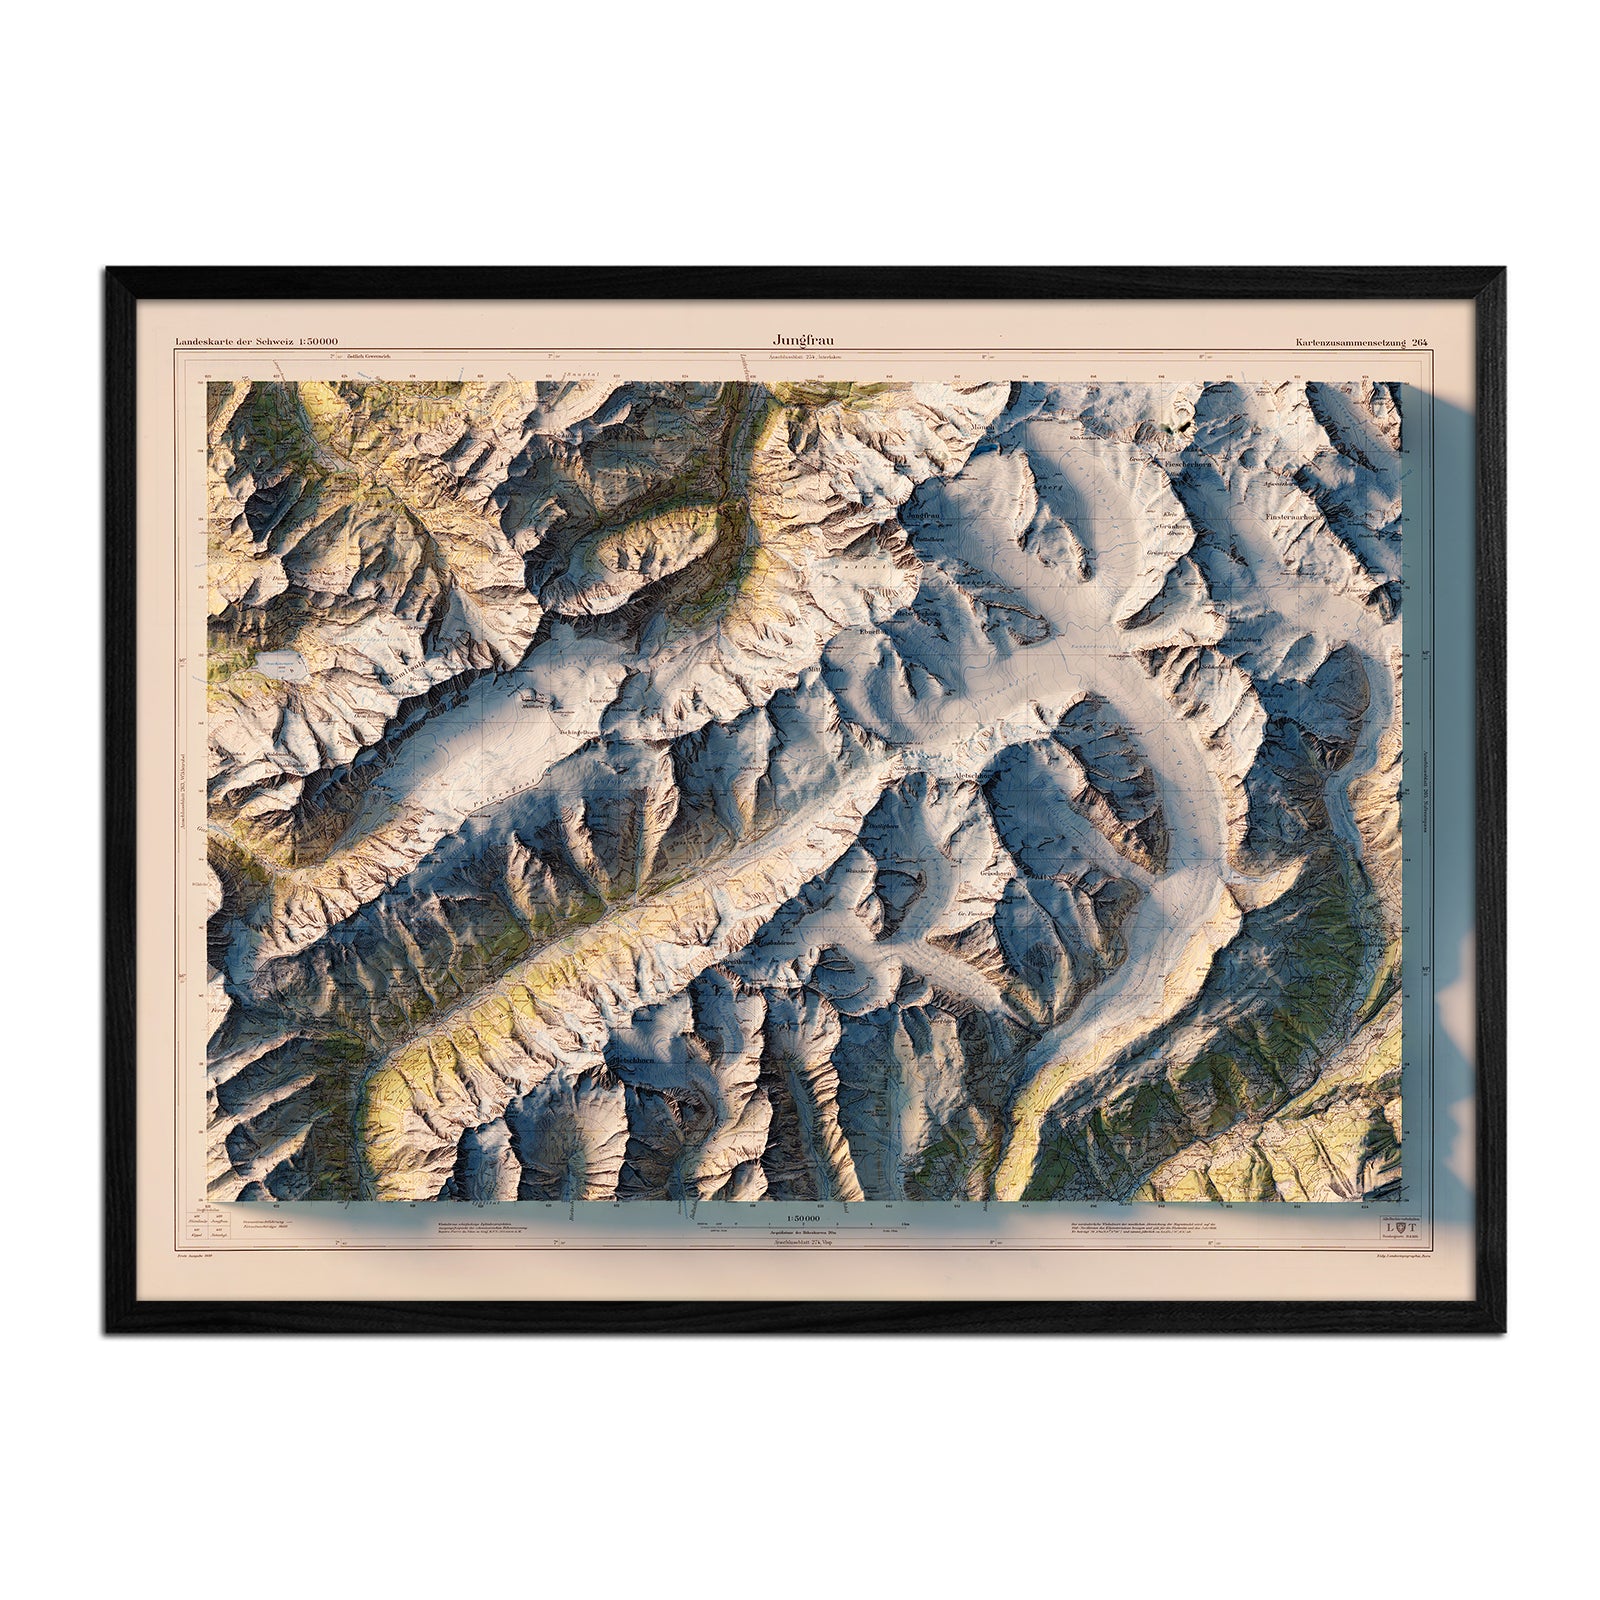 Jungfrau Relief Map - 1954